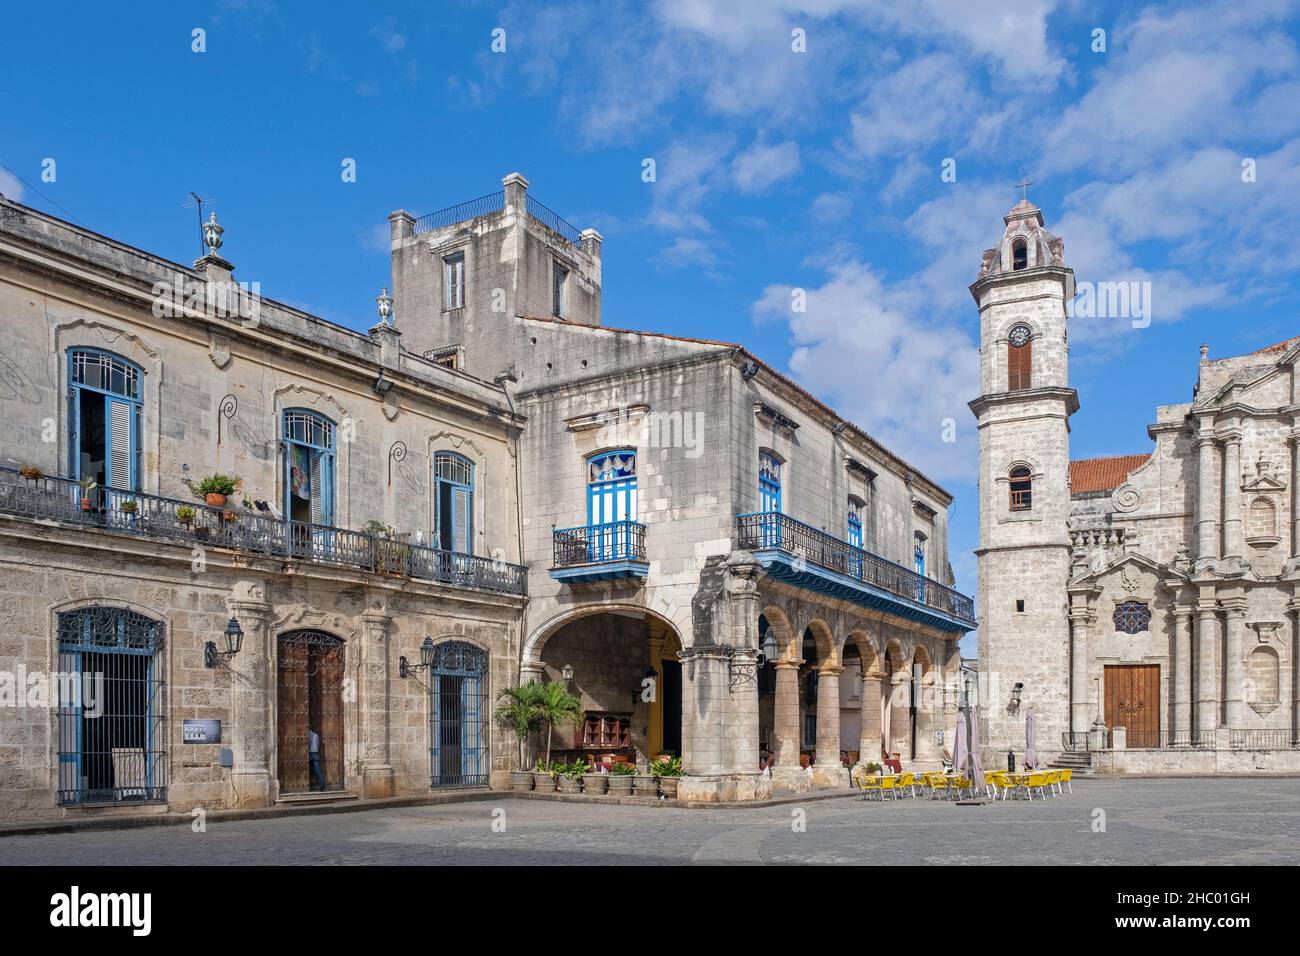 Plaza de la Catedral / Cathedral Square und die Catedral de San Cristobal im kolonialen Stadtzentrum Alt-Havanna, La Habana auf der Insel Kuba Stockfoto